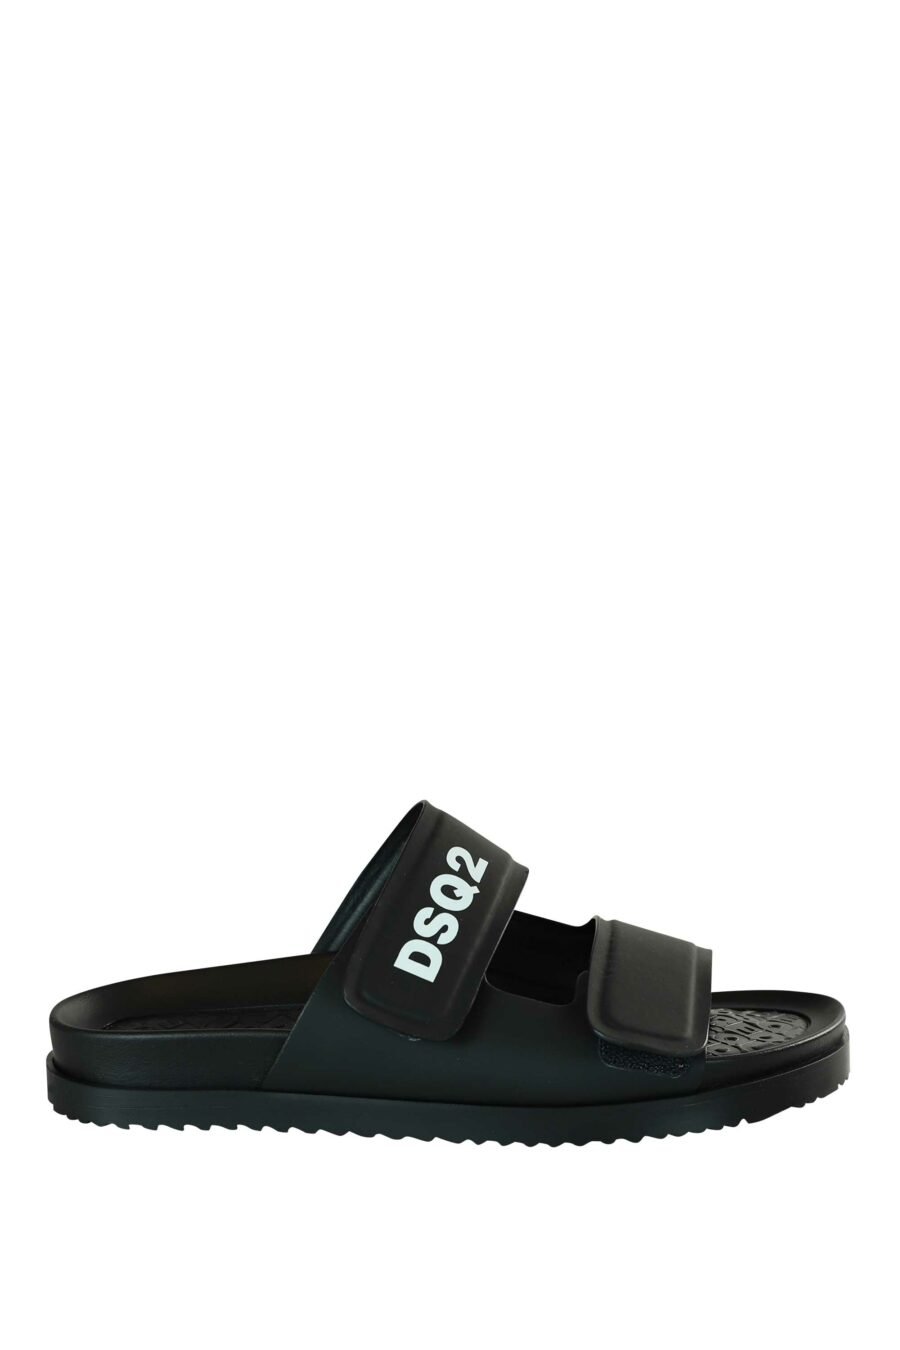 Sandalias negras con logo "dsq2" blanco y velcro - 8055777203200